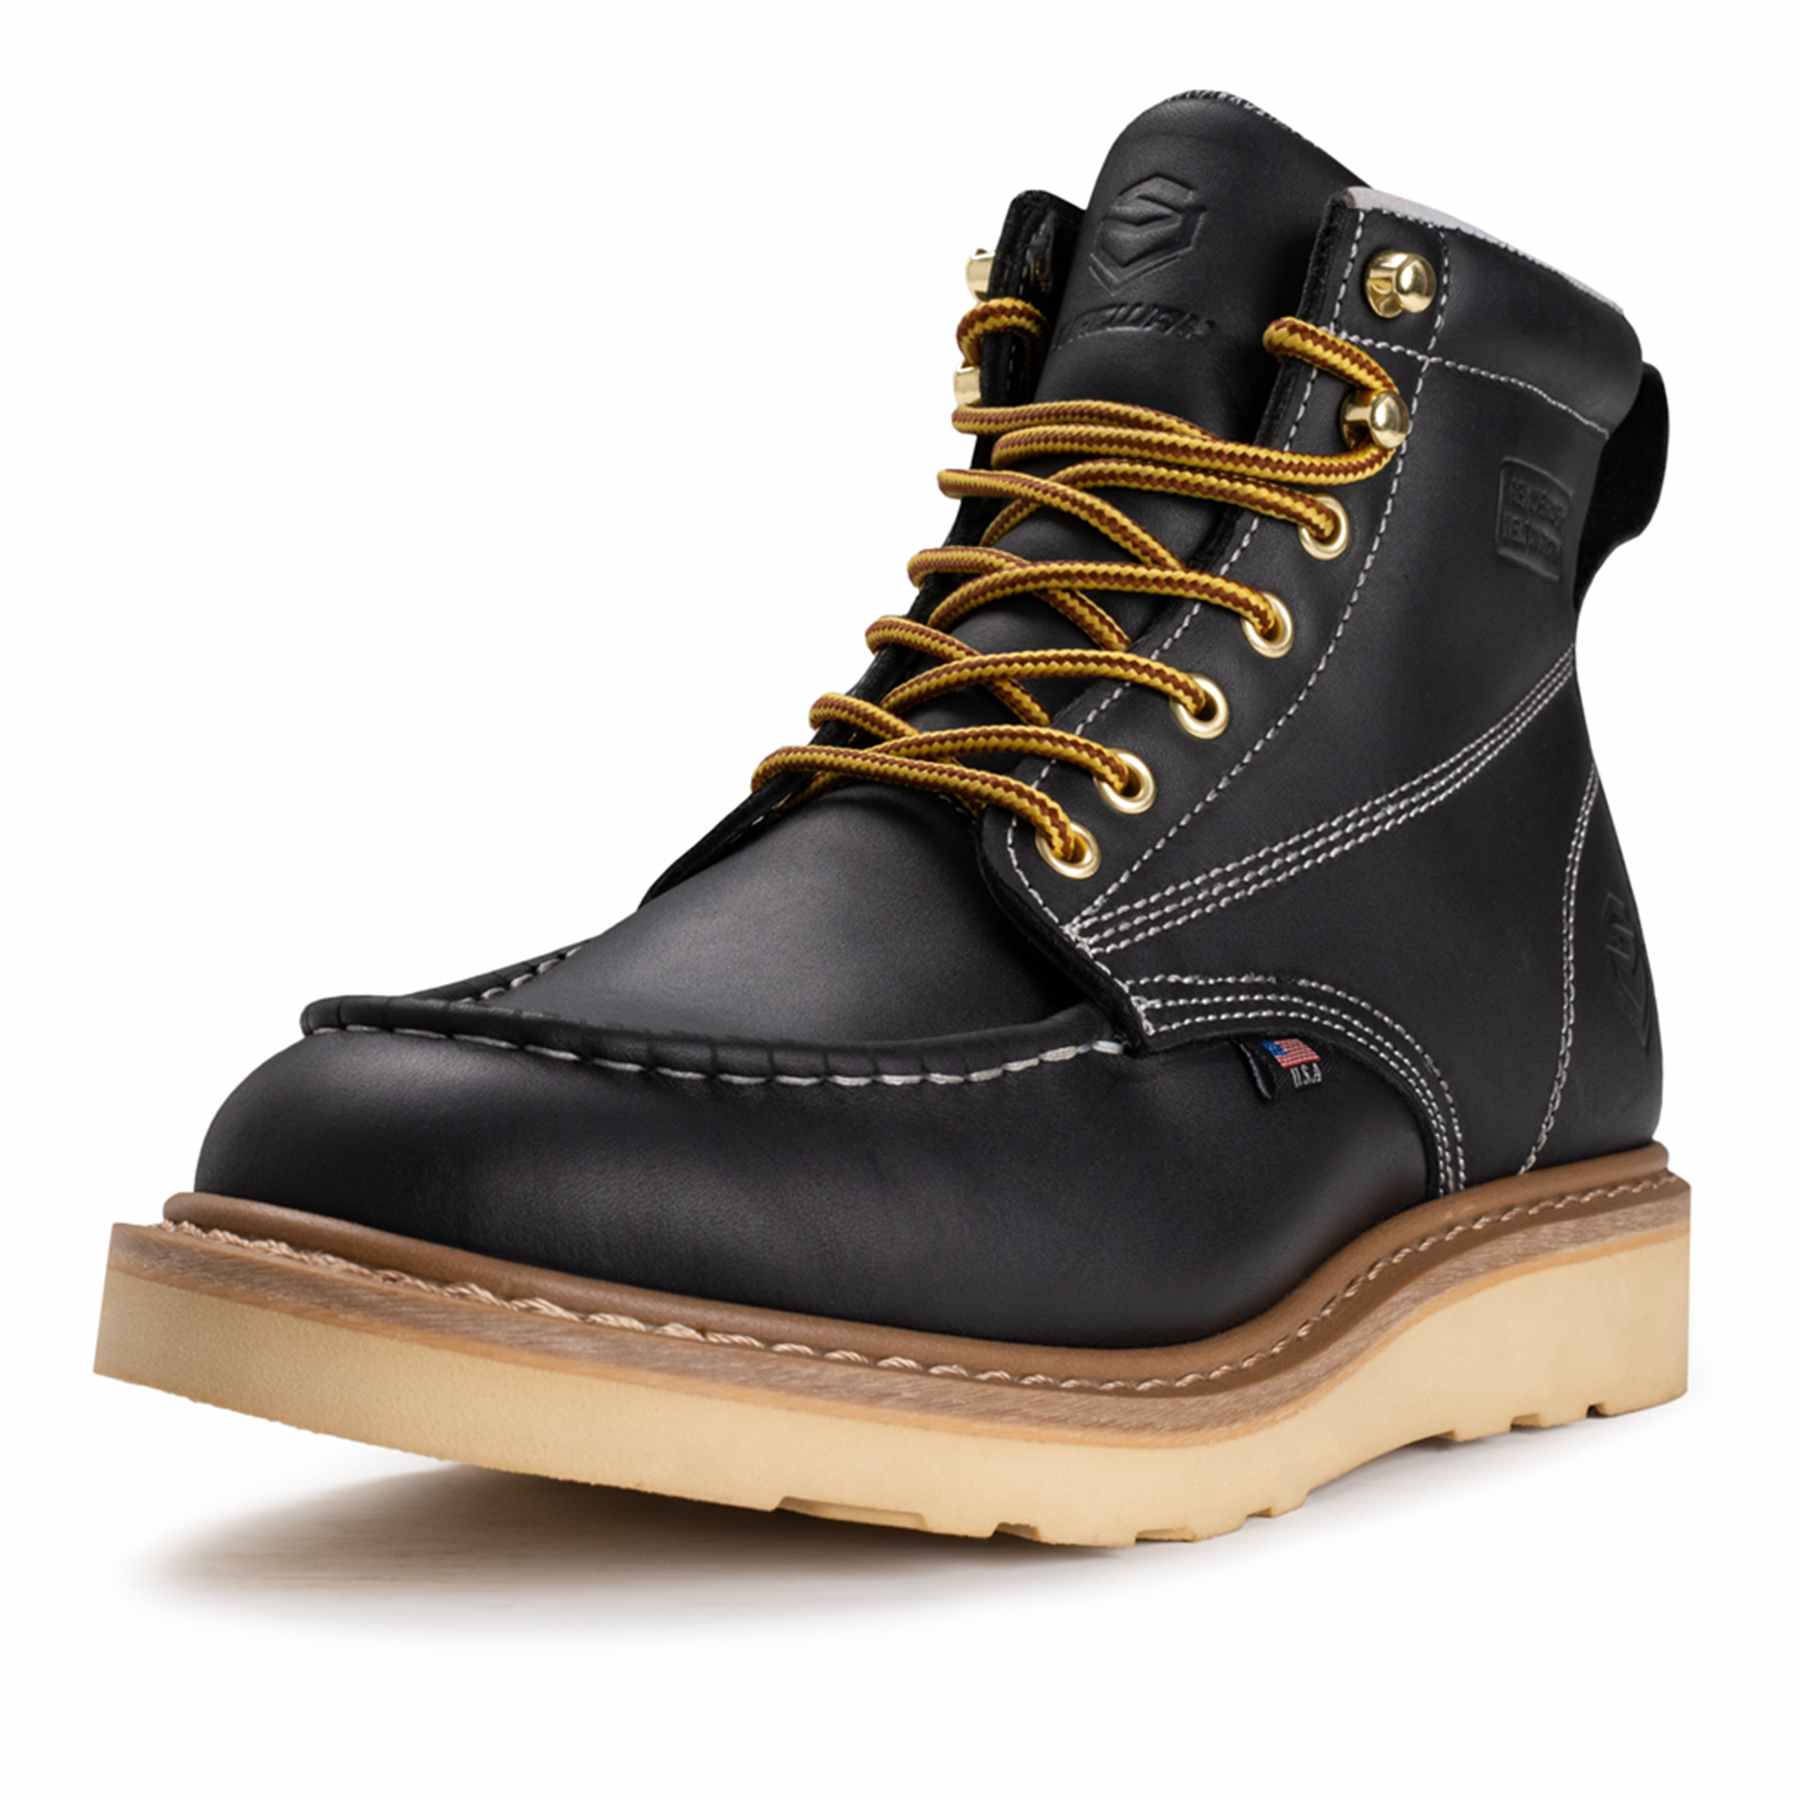 Sureway 6” Men/Women Black Wedge Moc Toe Soft Toe Work Boots